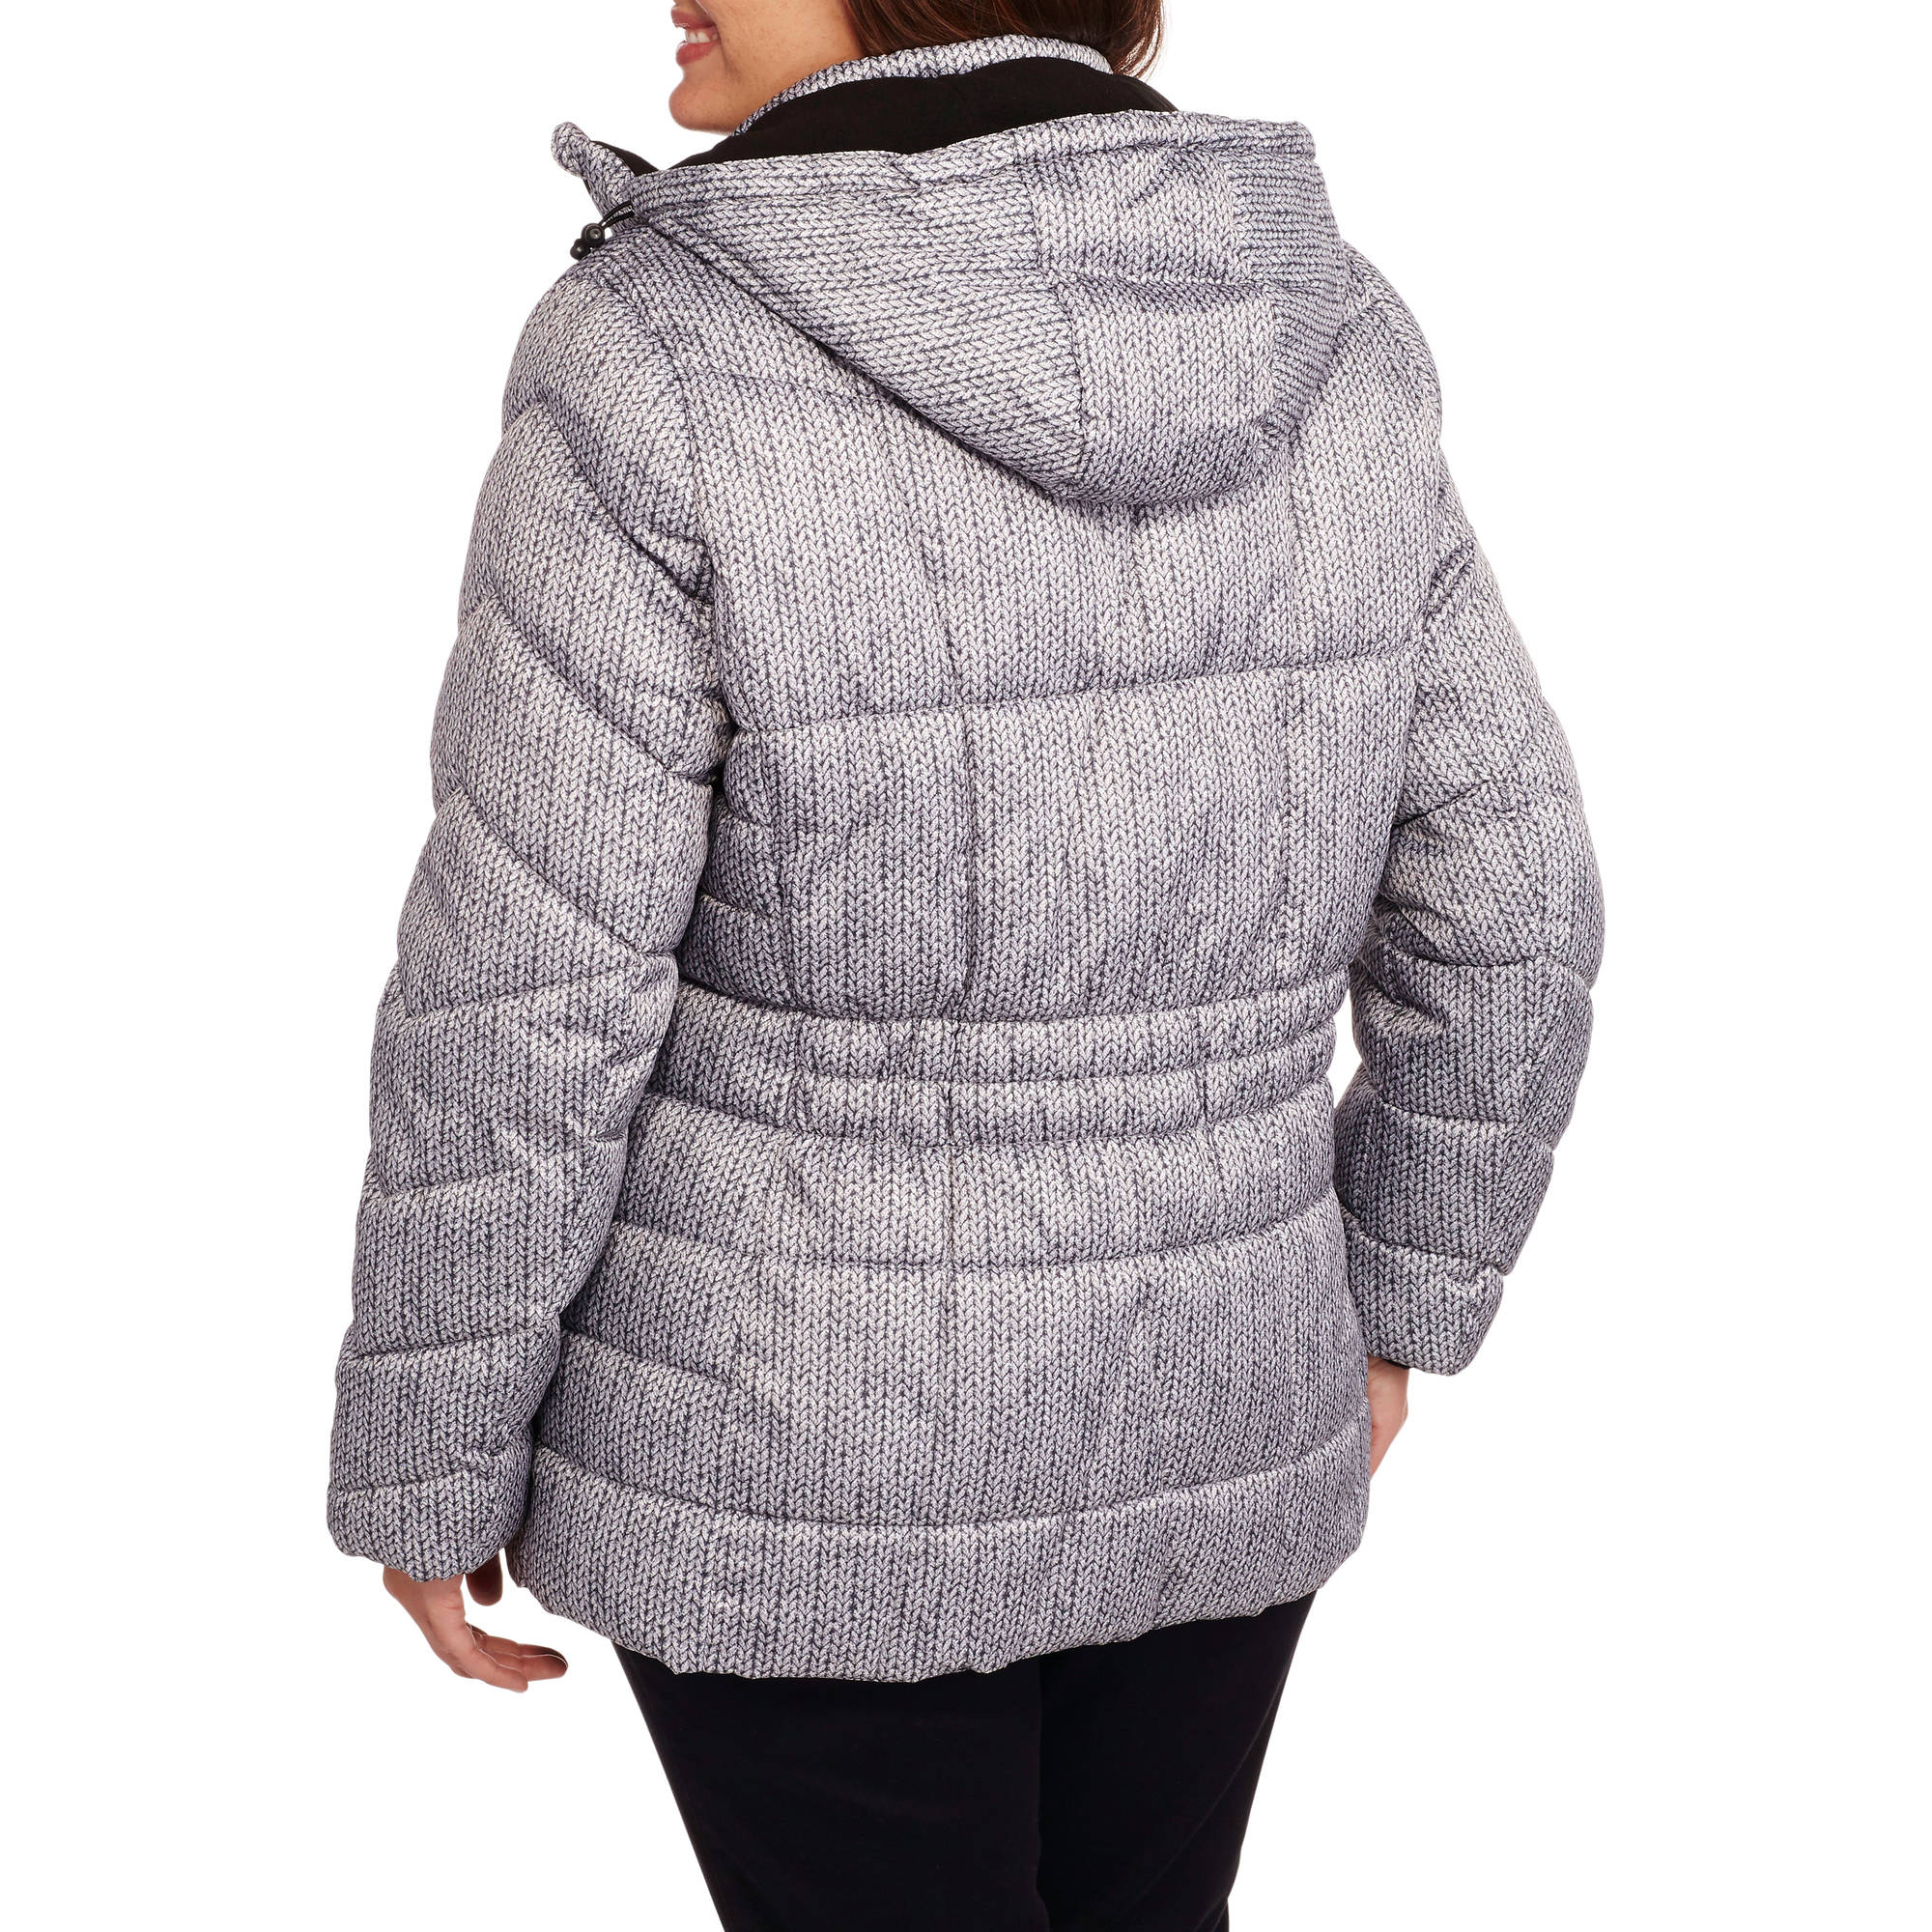 Women's Plus-Size Hooded Puffer Jacket Coat - image 2 of 2